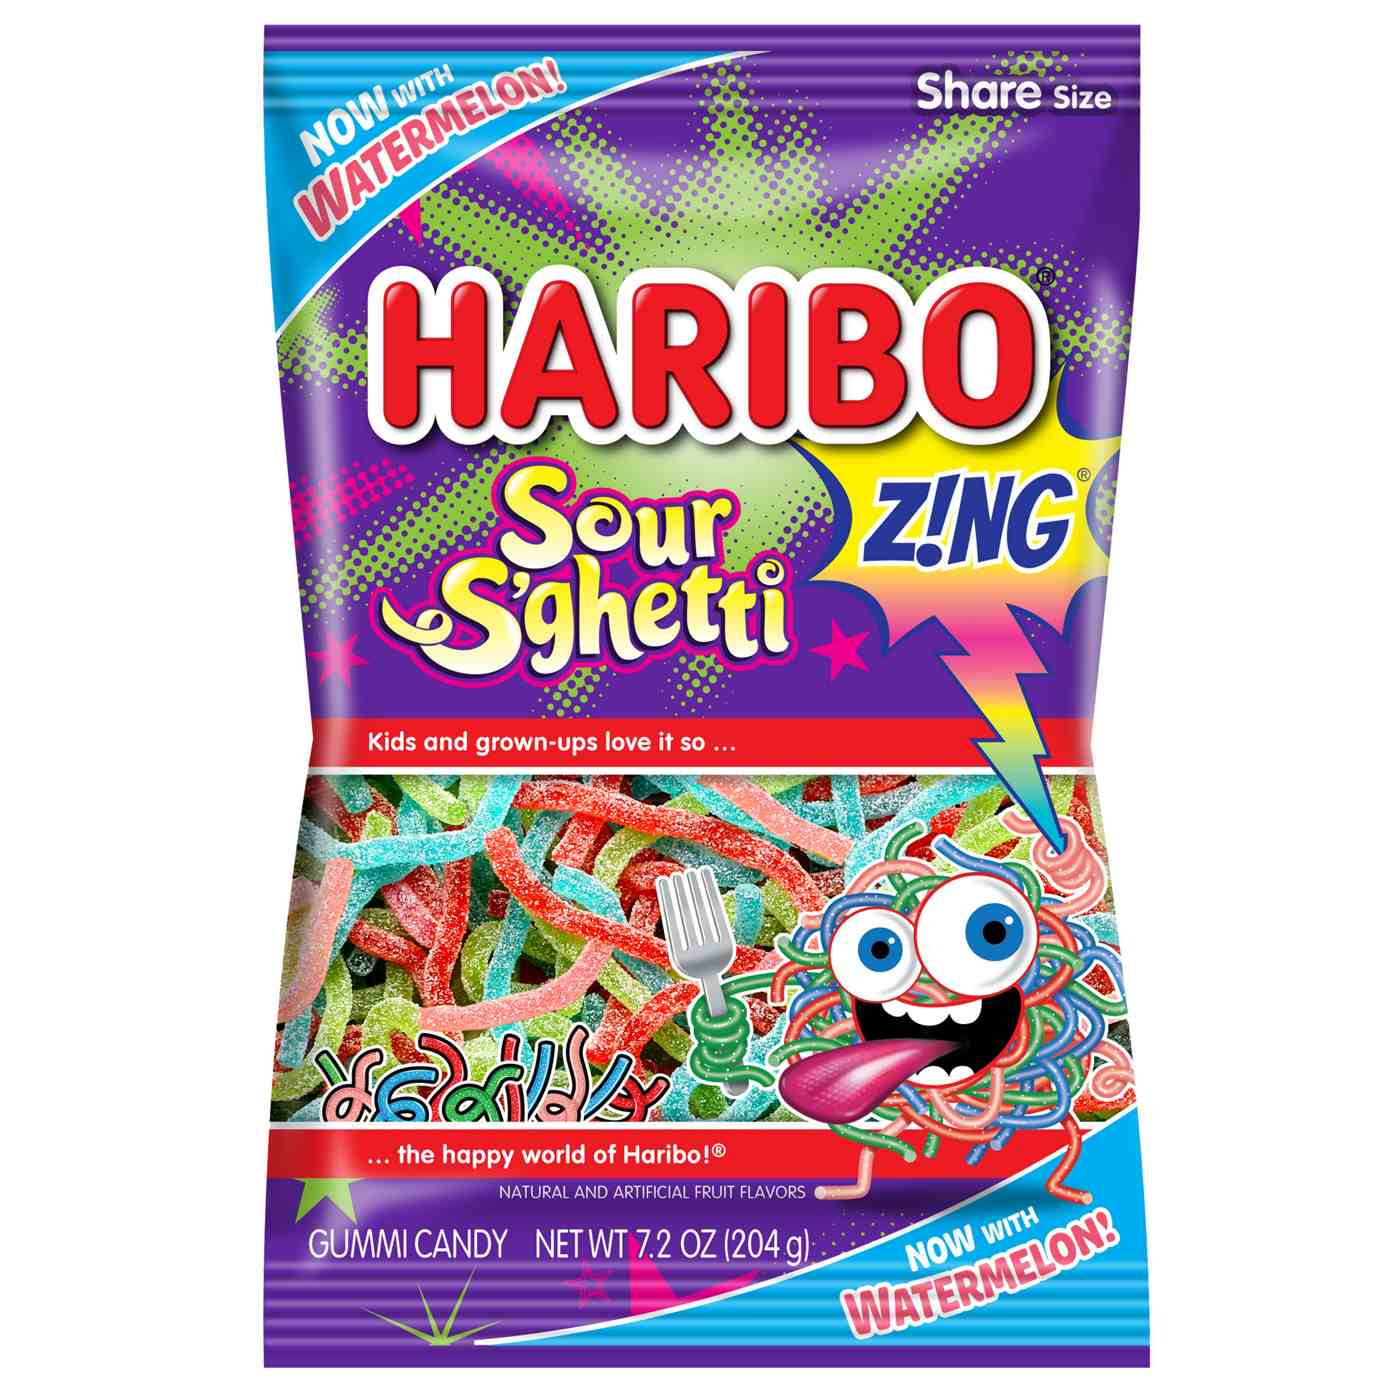 Haribo Sour Sghetti Gummi Candy - Share Size; image 1 of 2